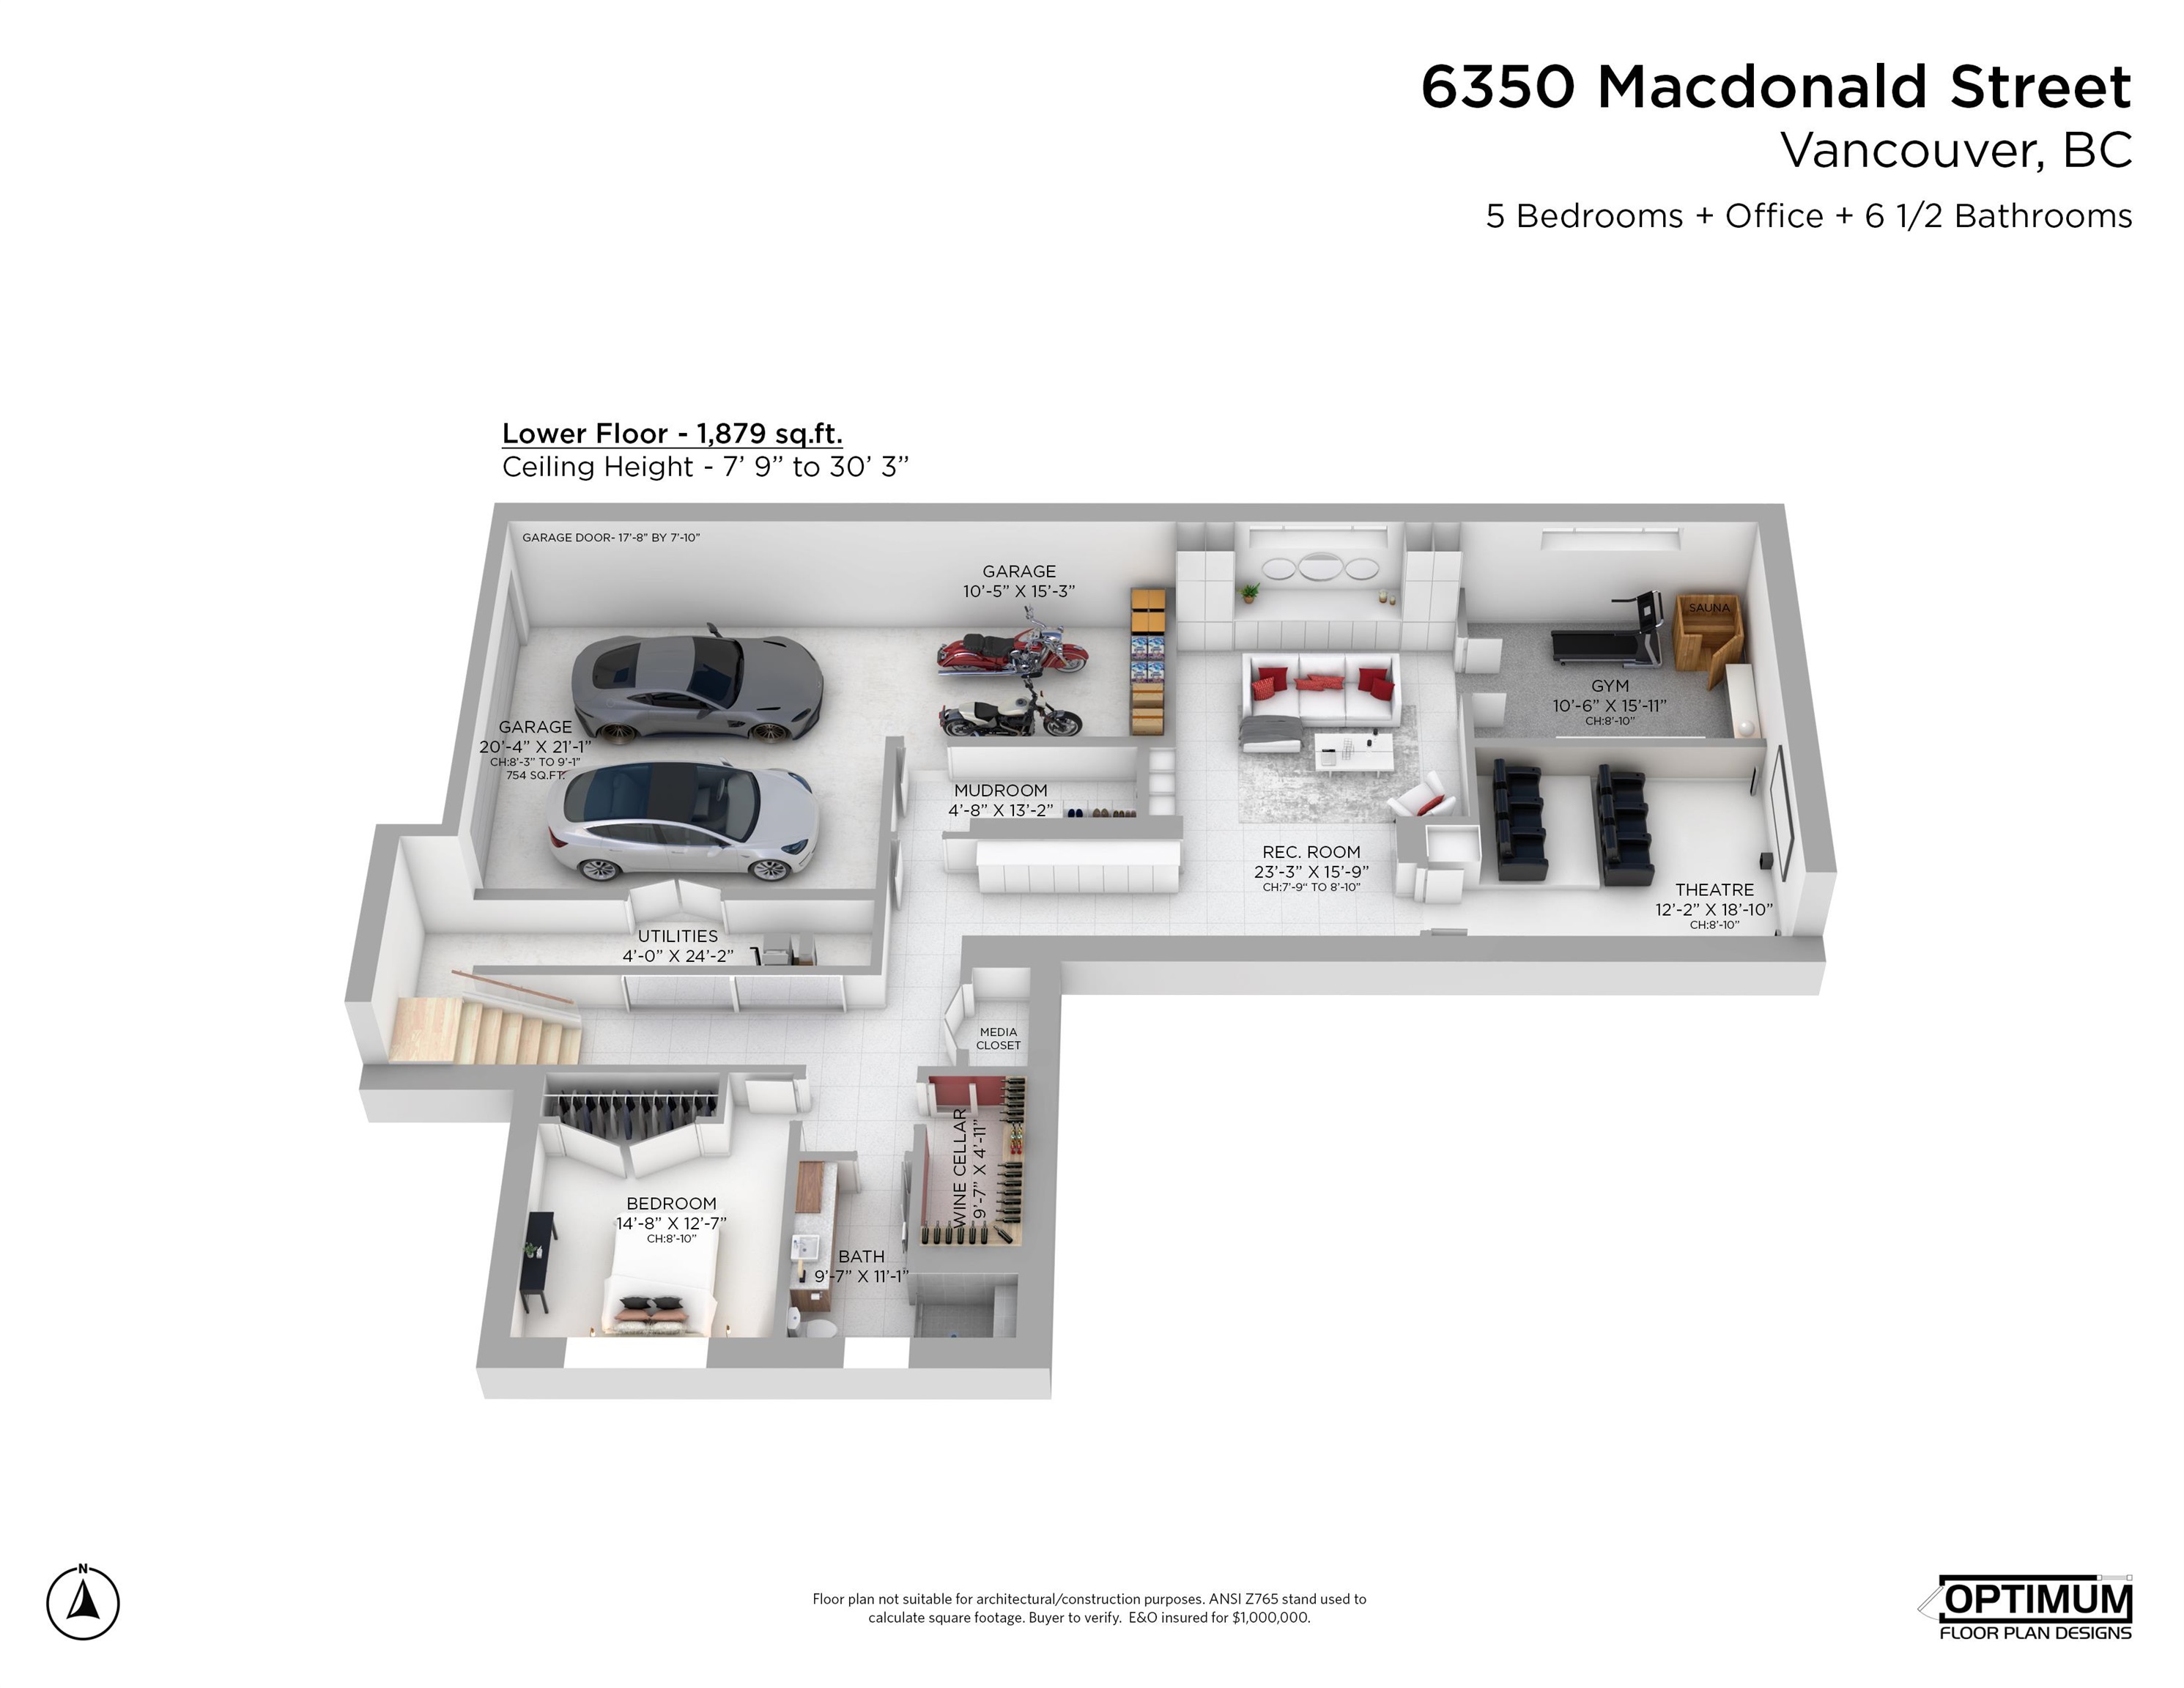 Listing image of 6350 MACDONALD STREET